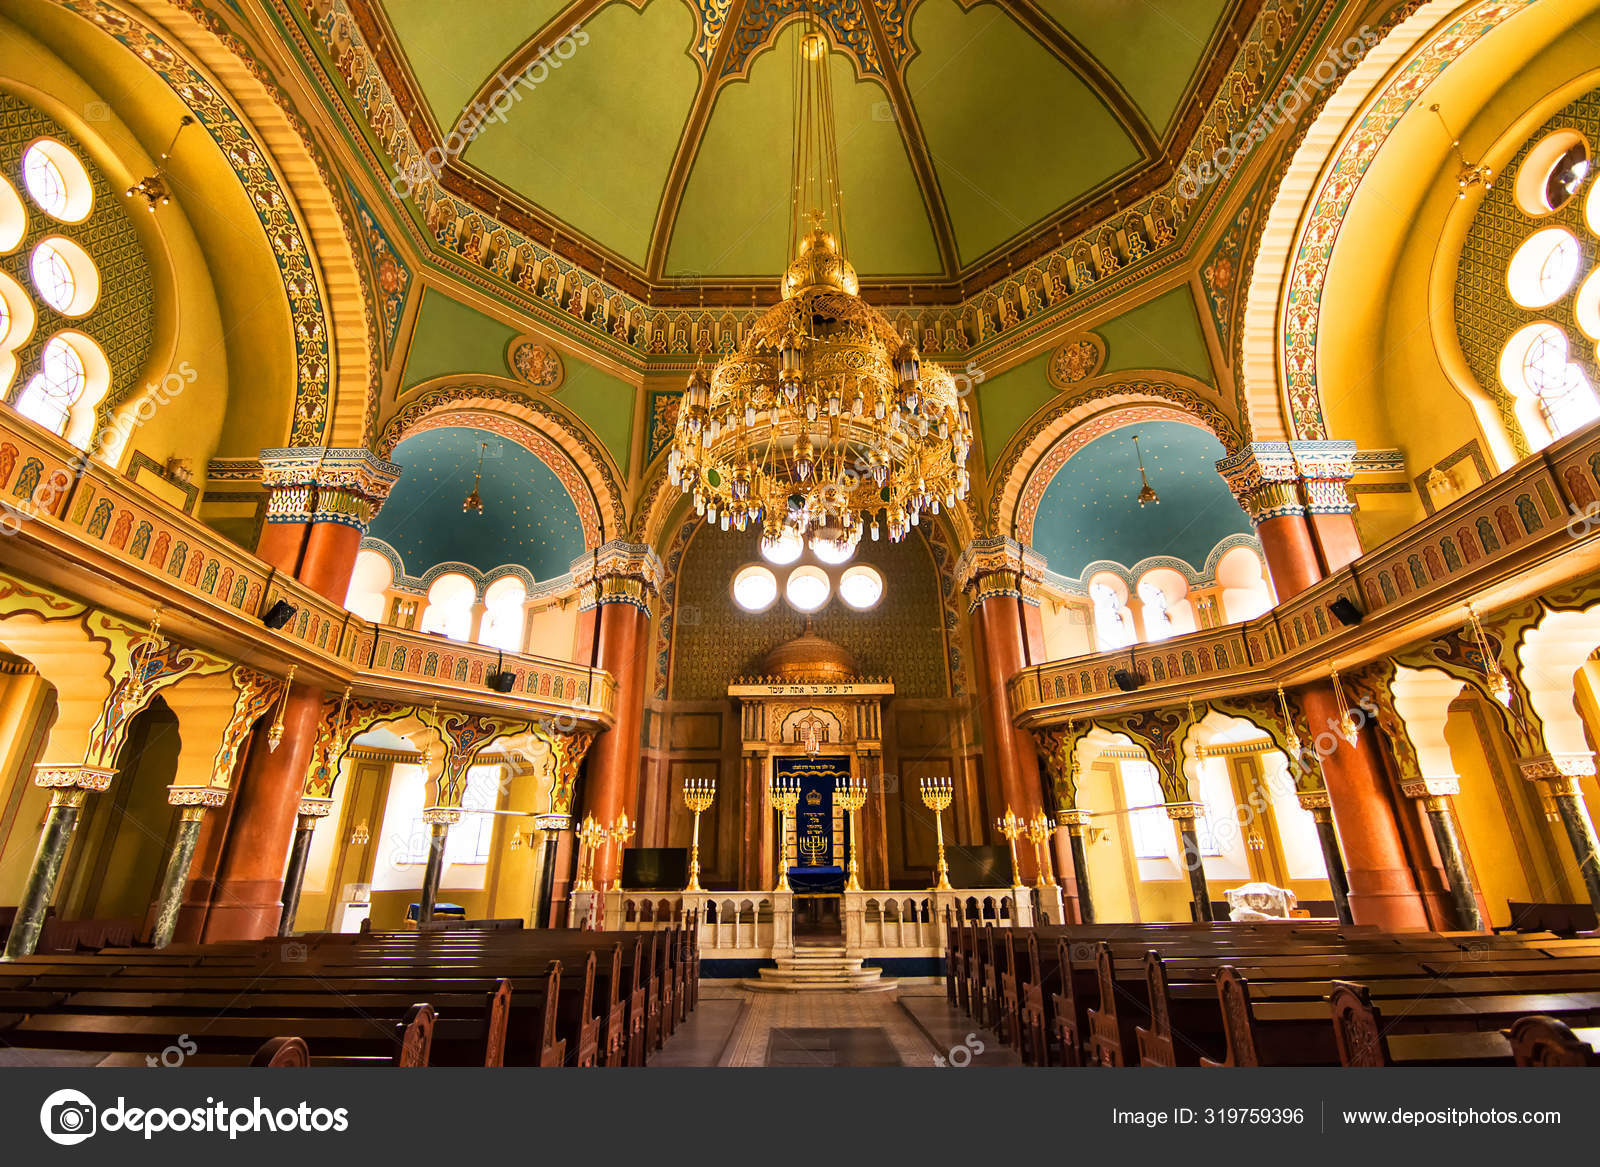 Fotos de Sinagoga, Imagens de Sinagoga sem royalties